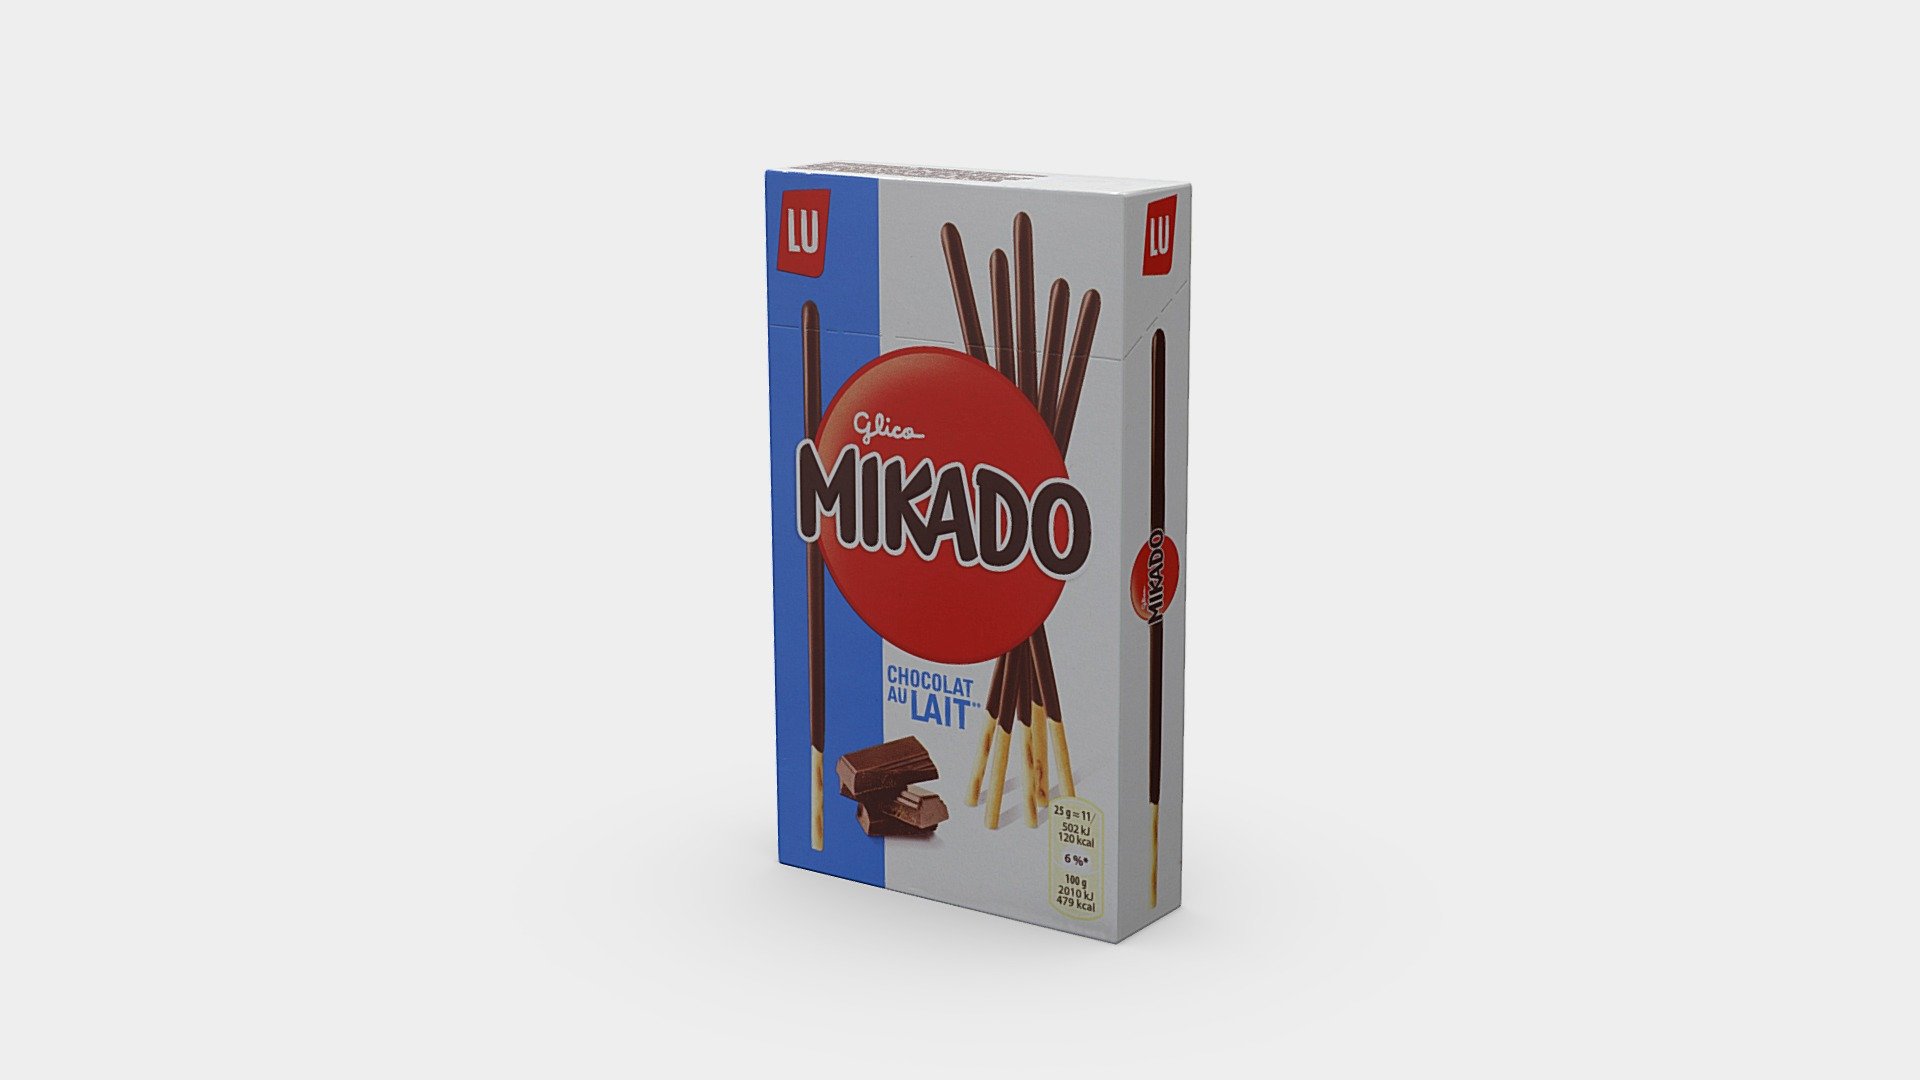 Mikado Cioccolato al Latte 75 g
VR and game ready for high quality Architectural Visualization
EAN: 3017760363396 - MIKADO - Milk chocolate - 3D model by Invrsion 3d model